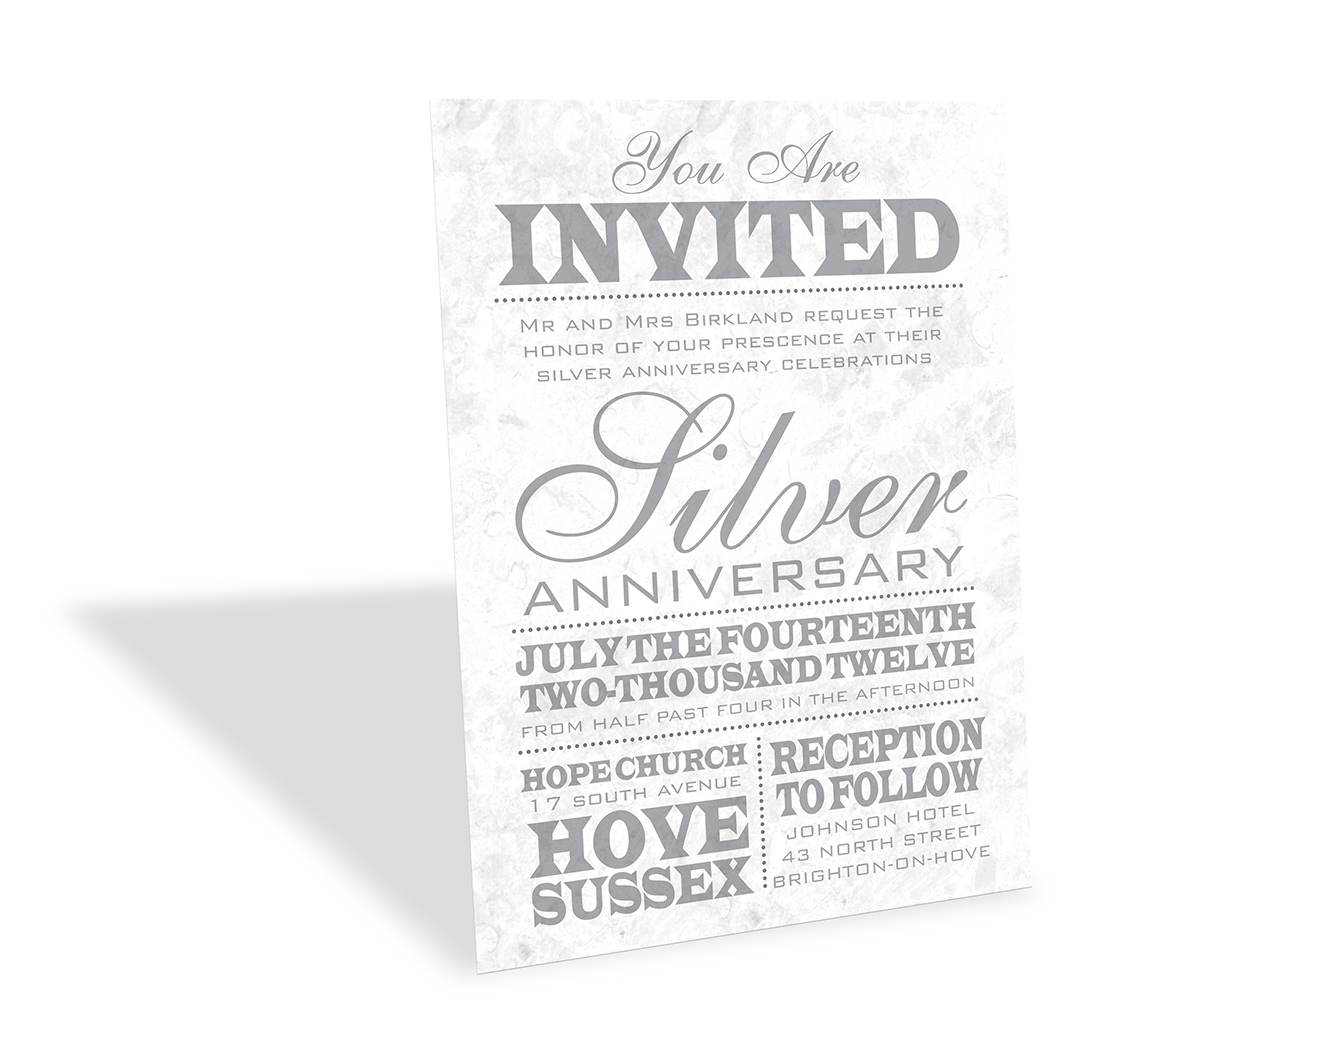 Solopress Event Invitations